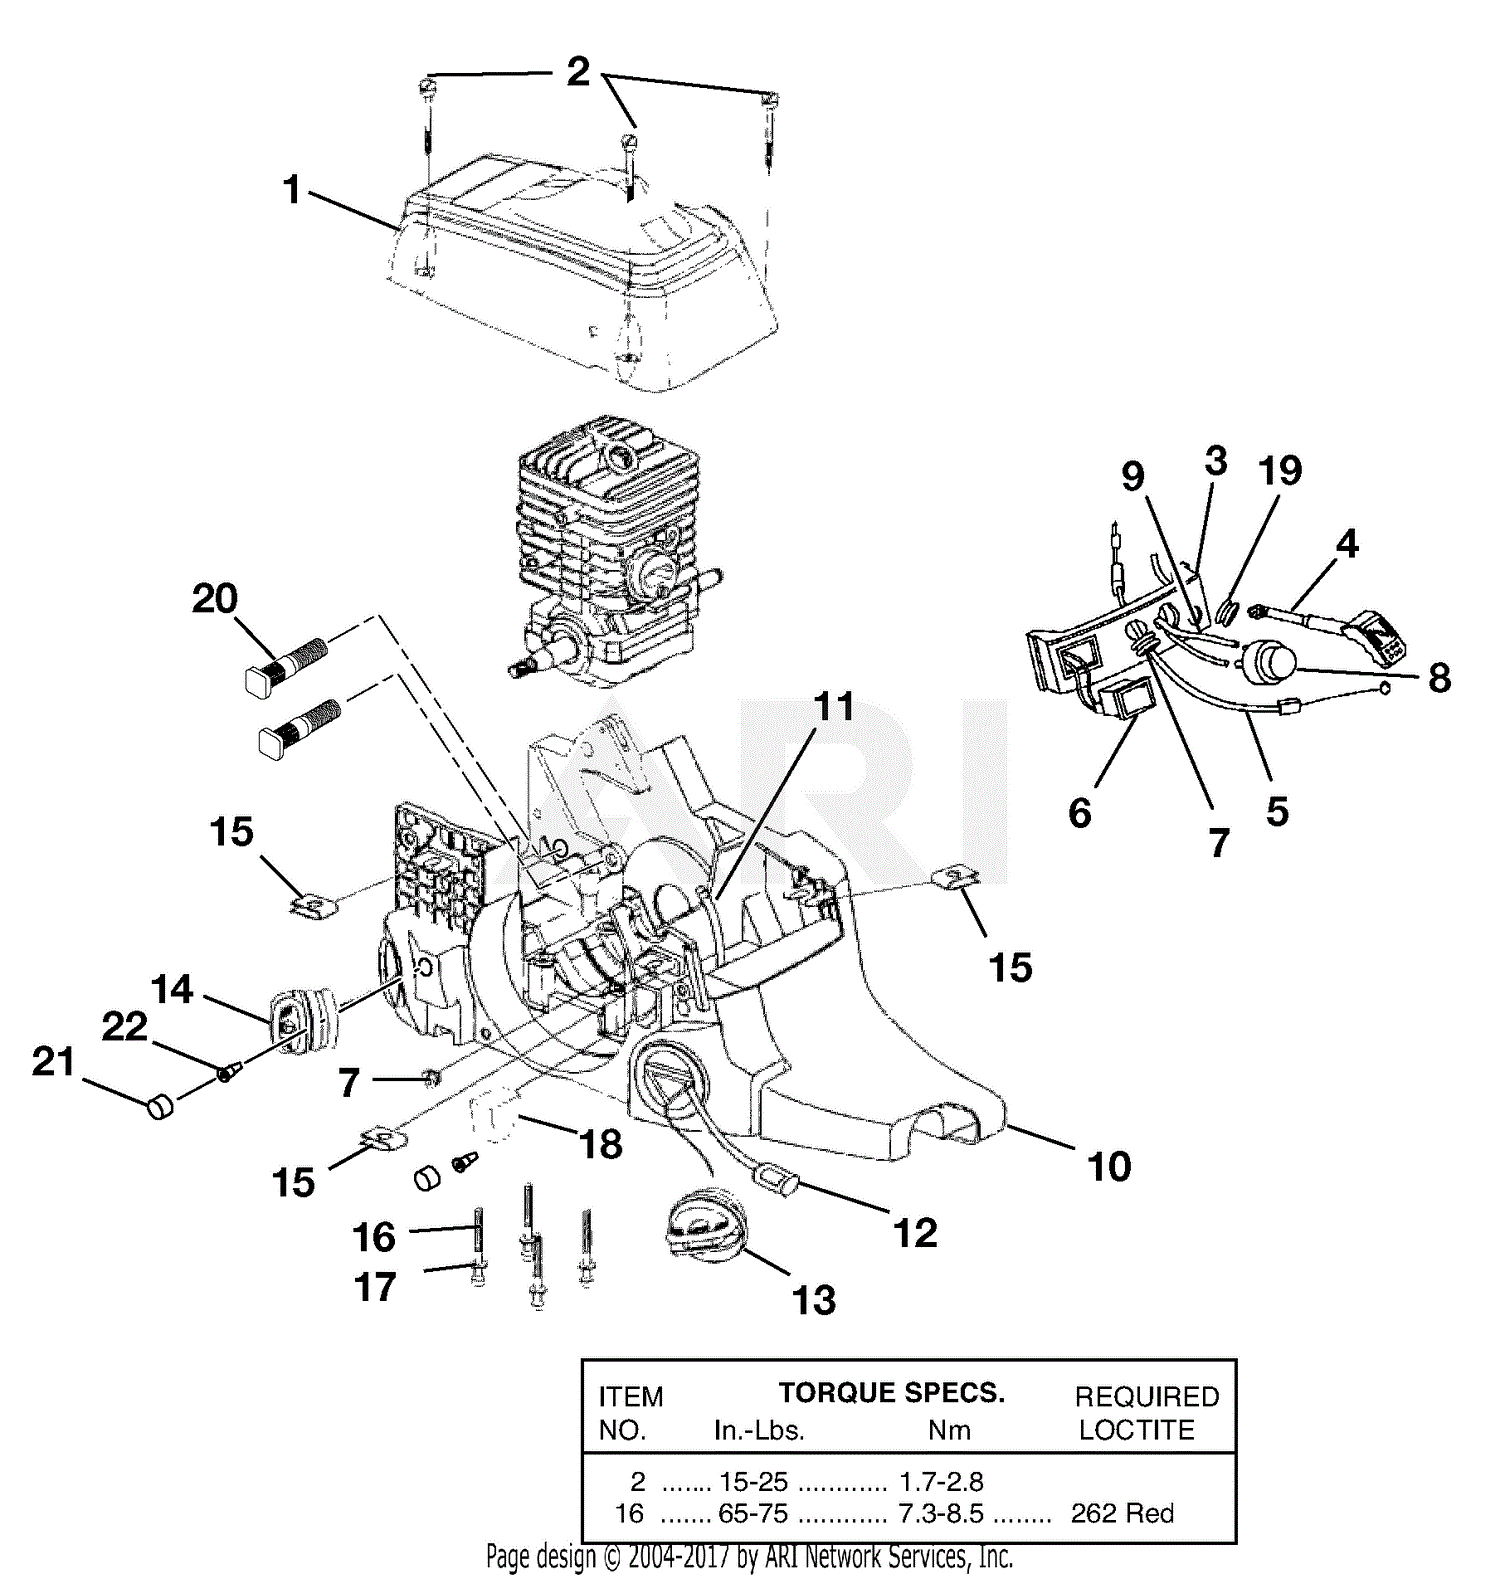 Homelite chainsaw fuel line diagram